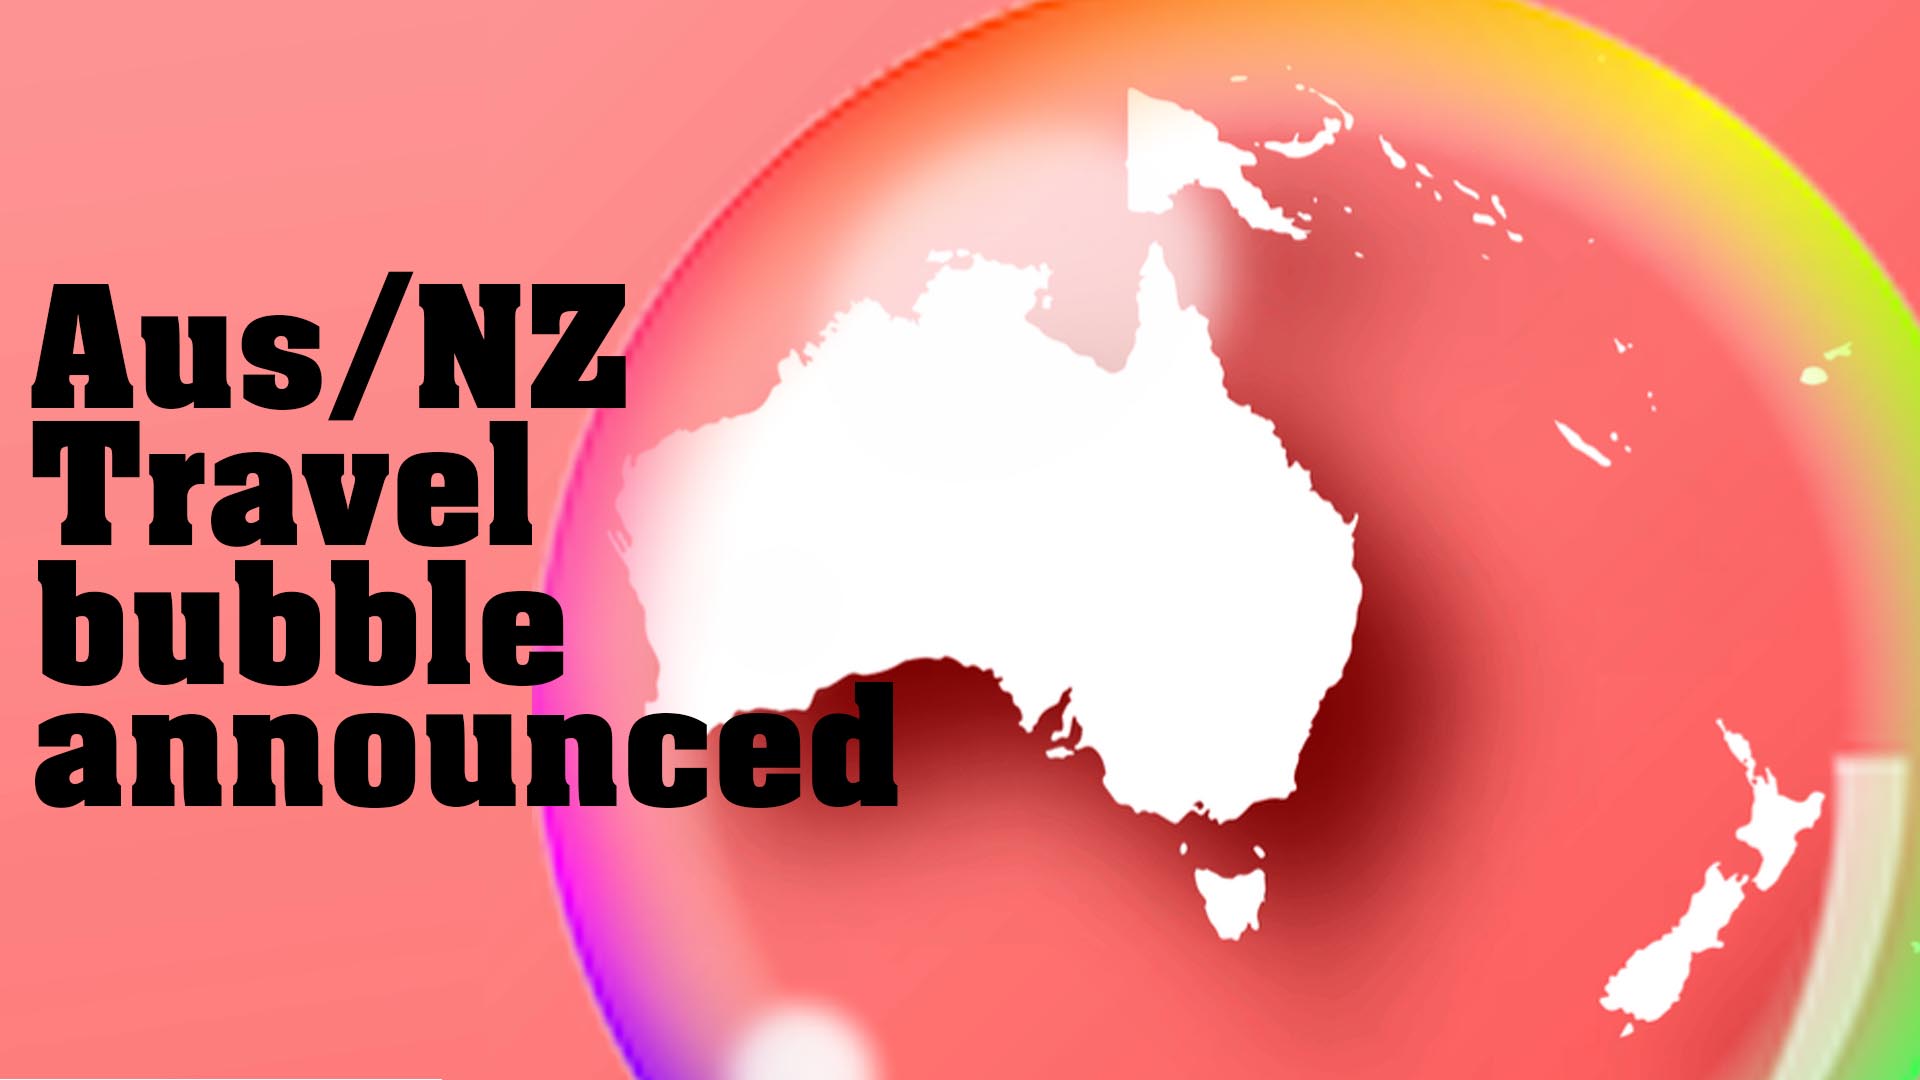 Australia/NZ travel bubble announced.